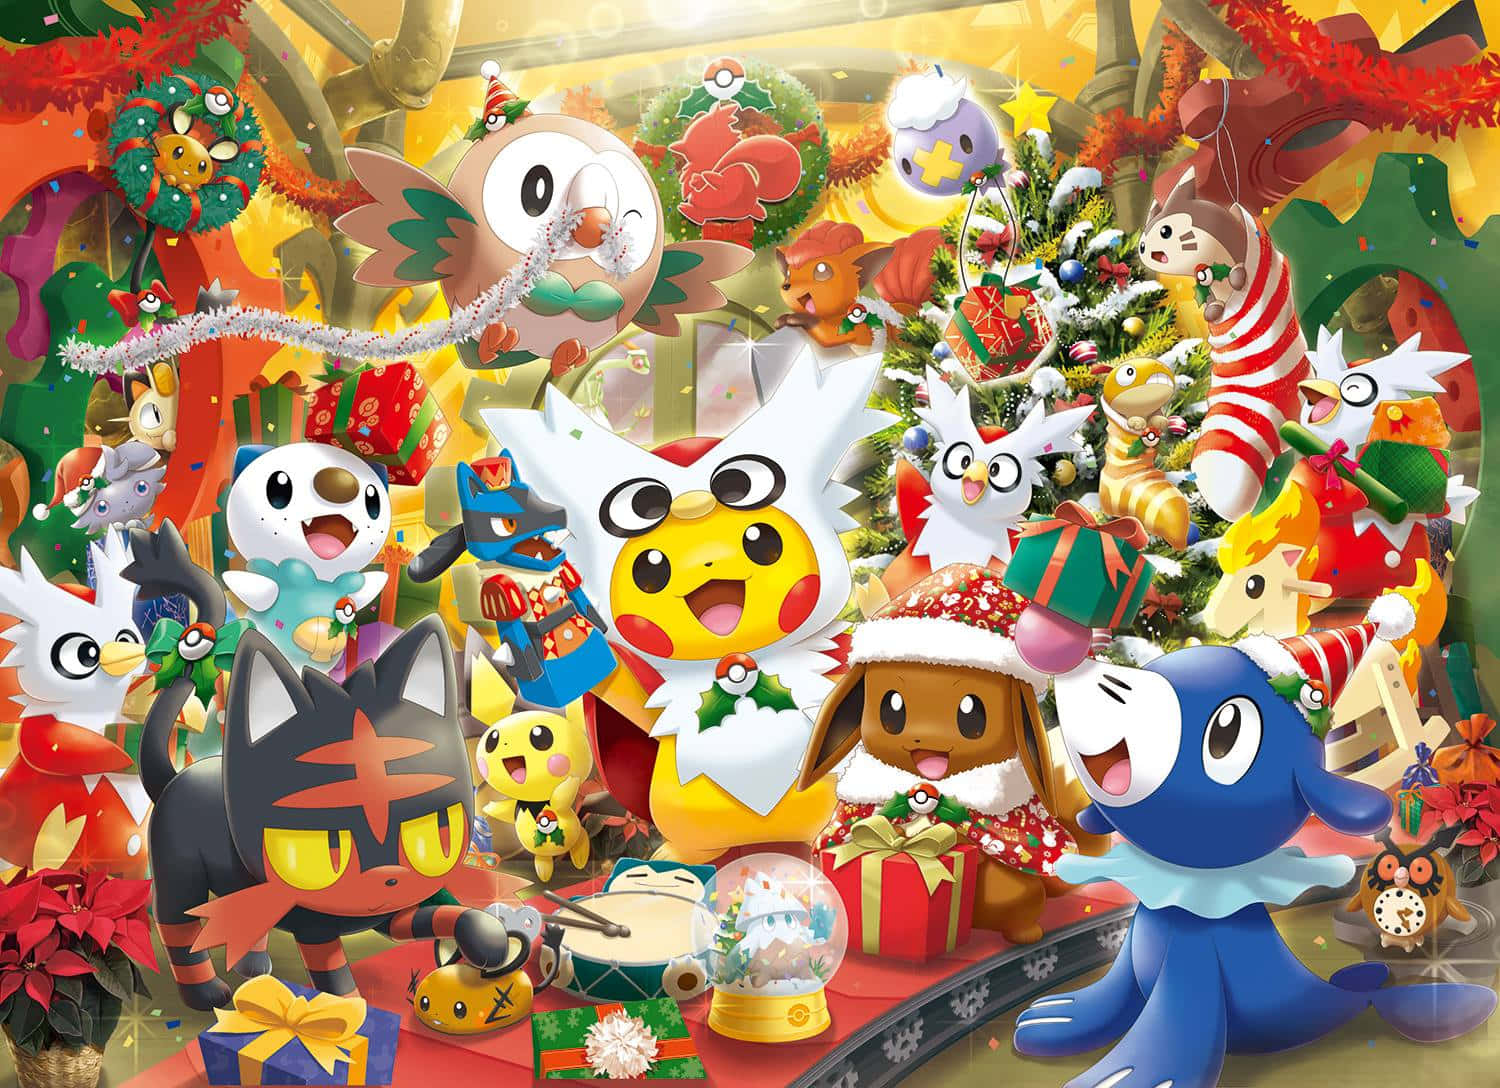 Pikachu and Eevee having a Christmas celebration Wallpaper